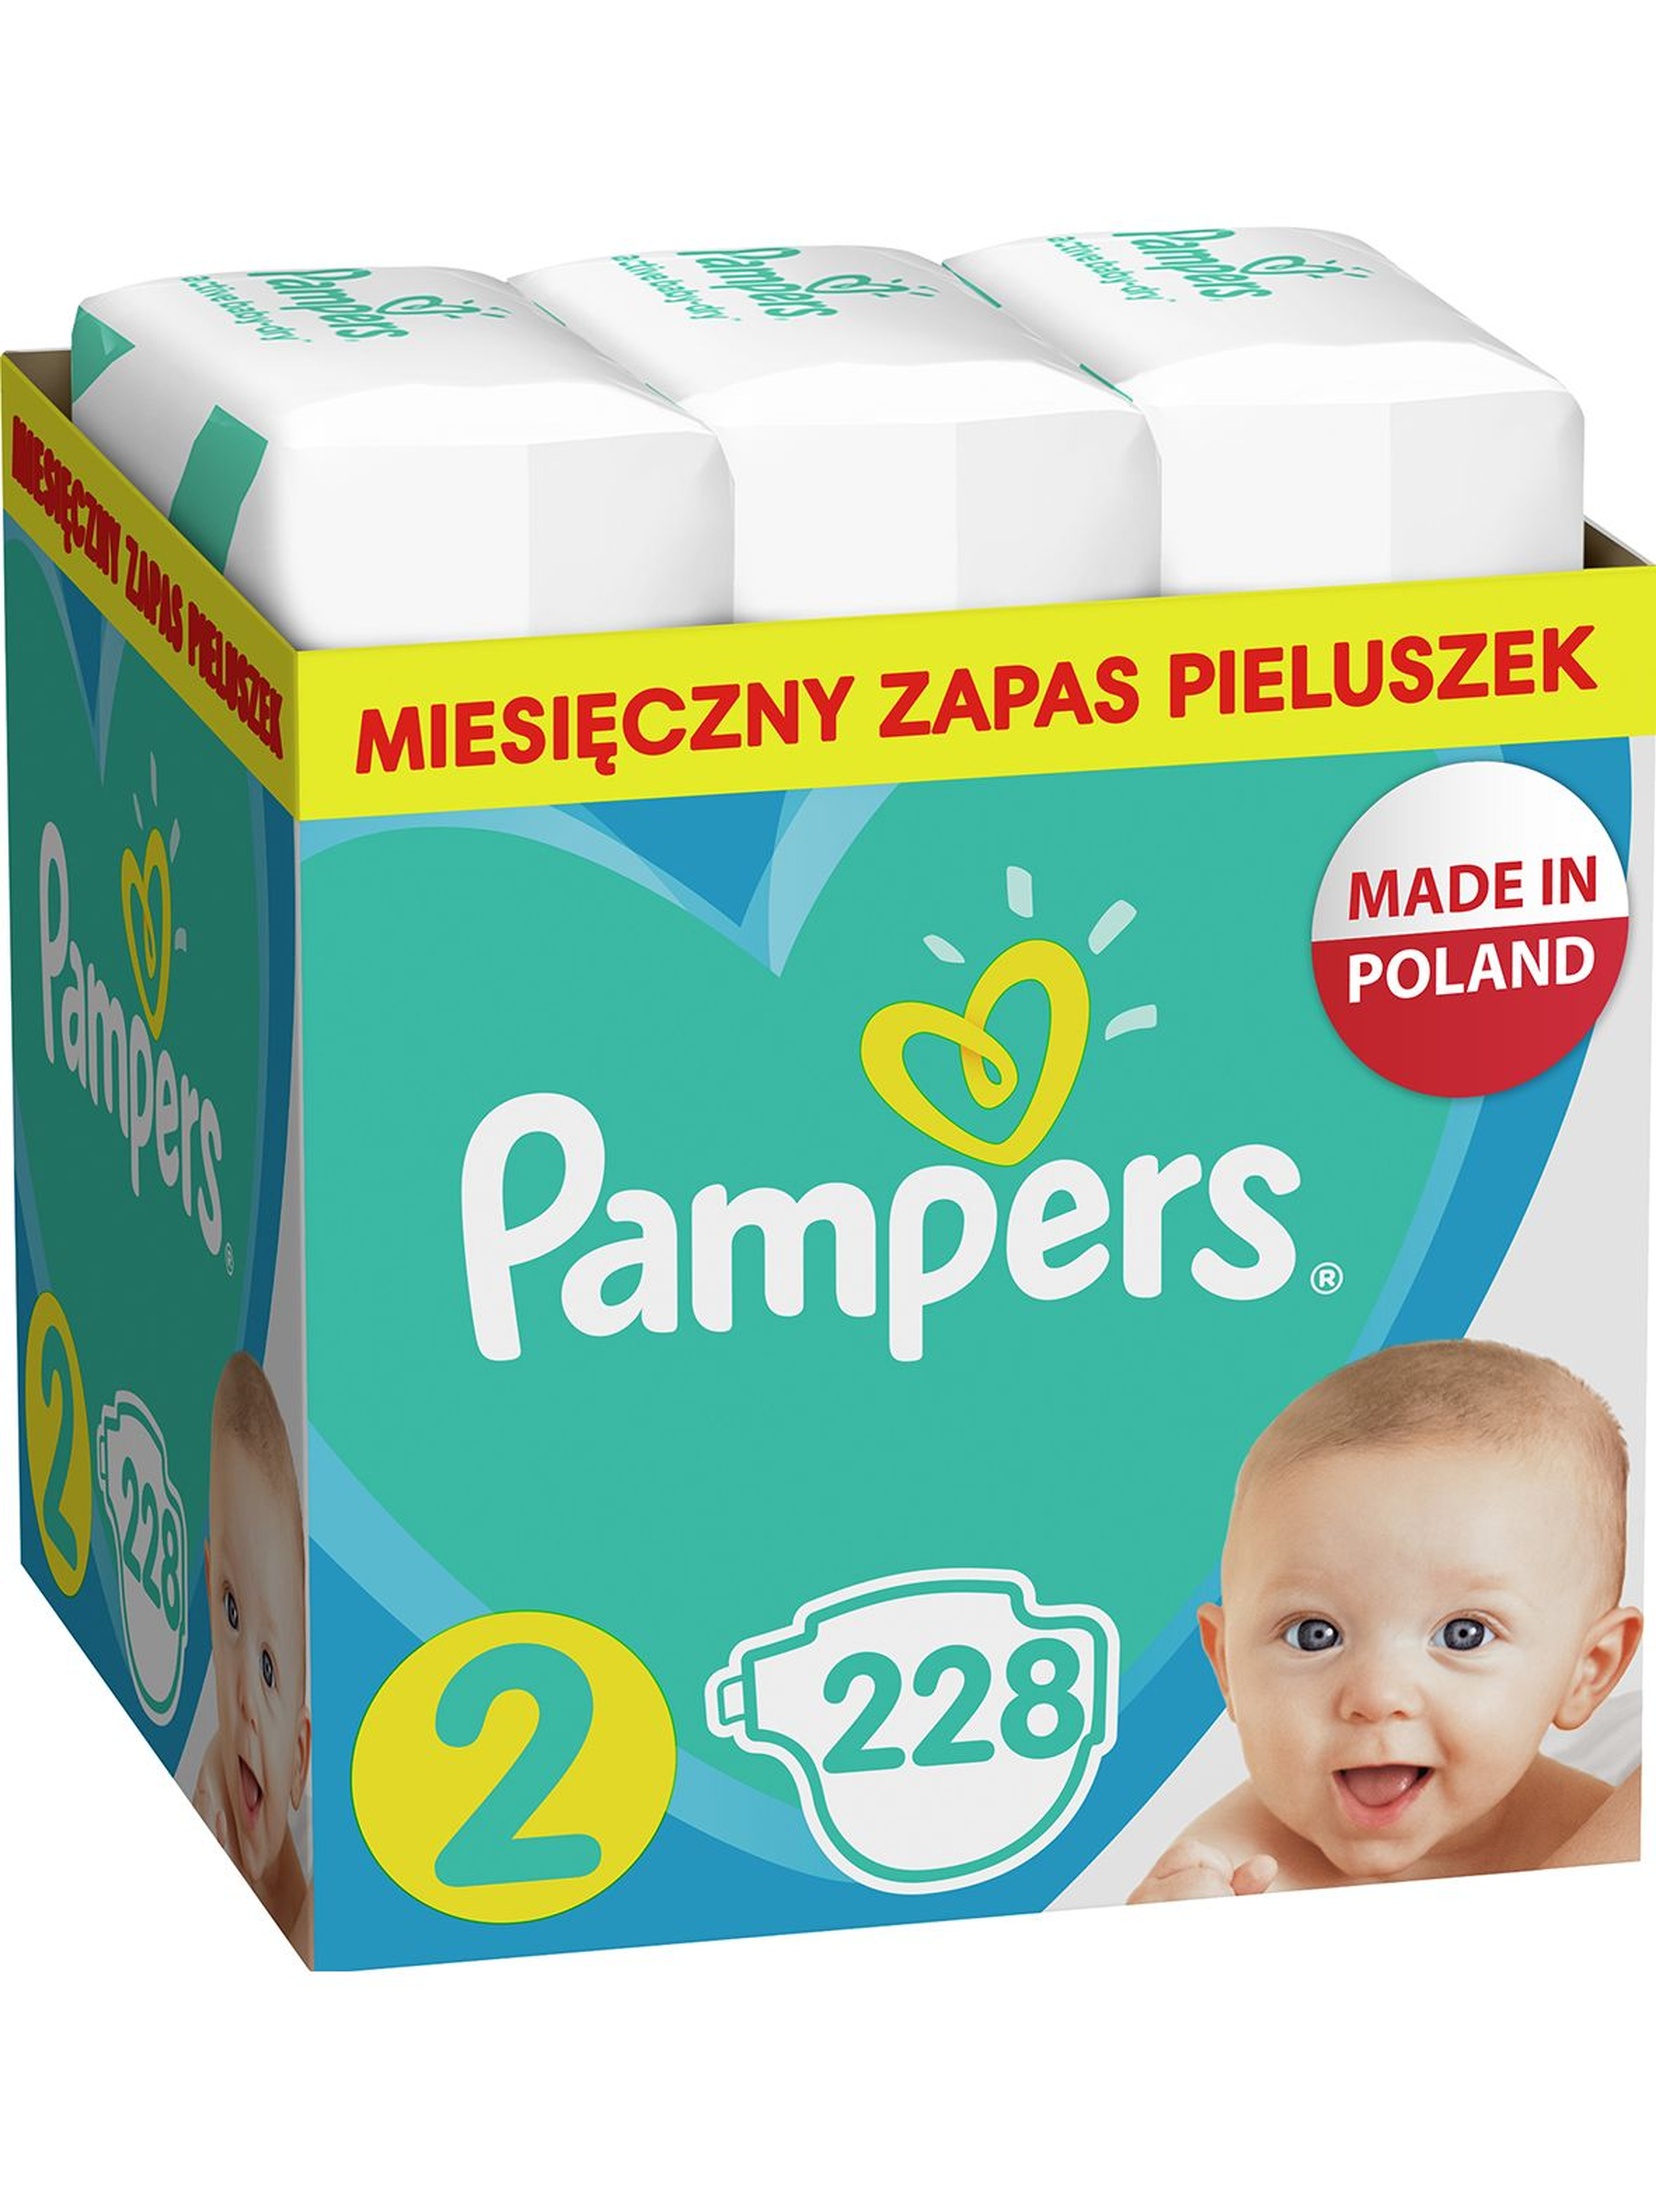 Pampers Active Baby, rozmiar 2, 228 pieluszek, 4-8kg